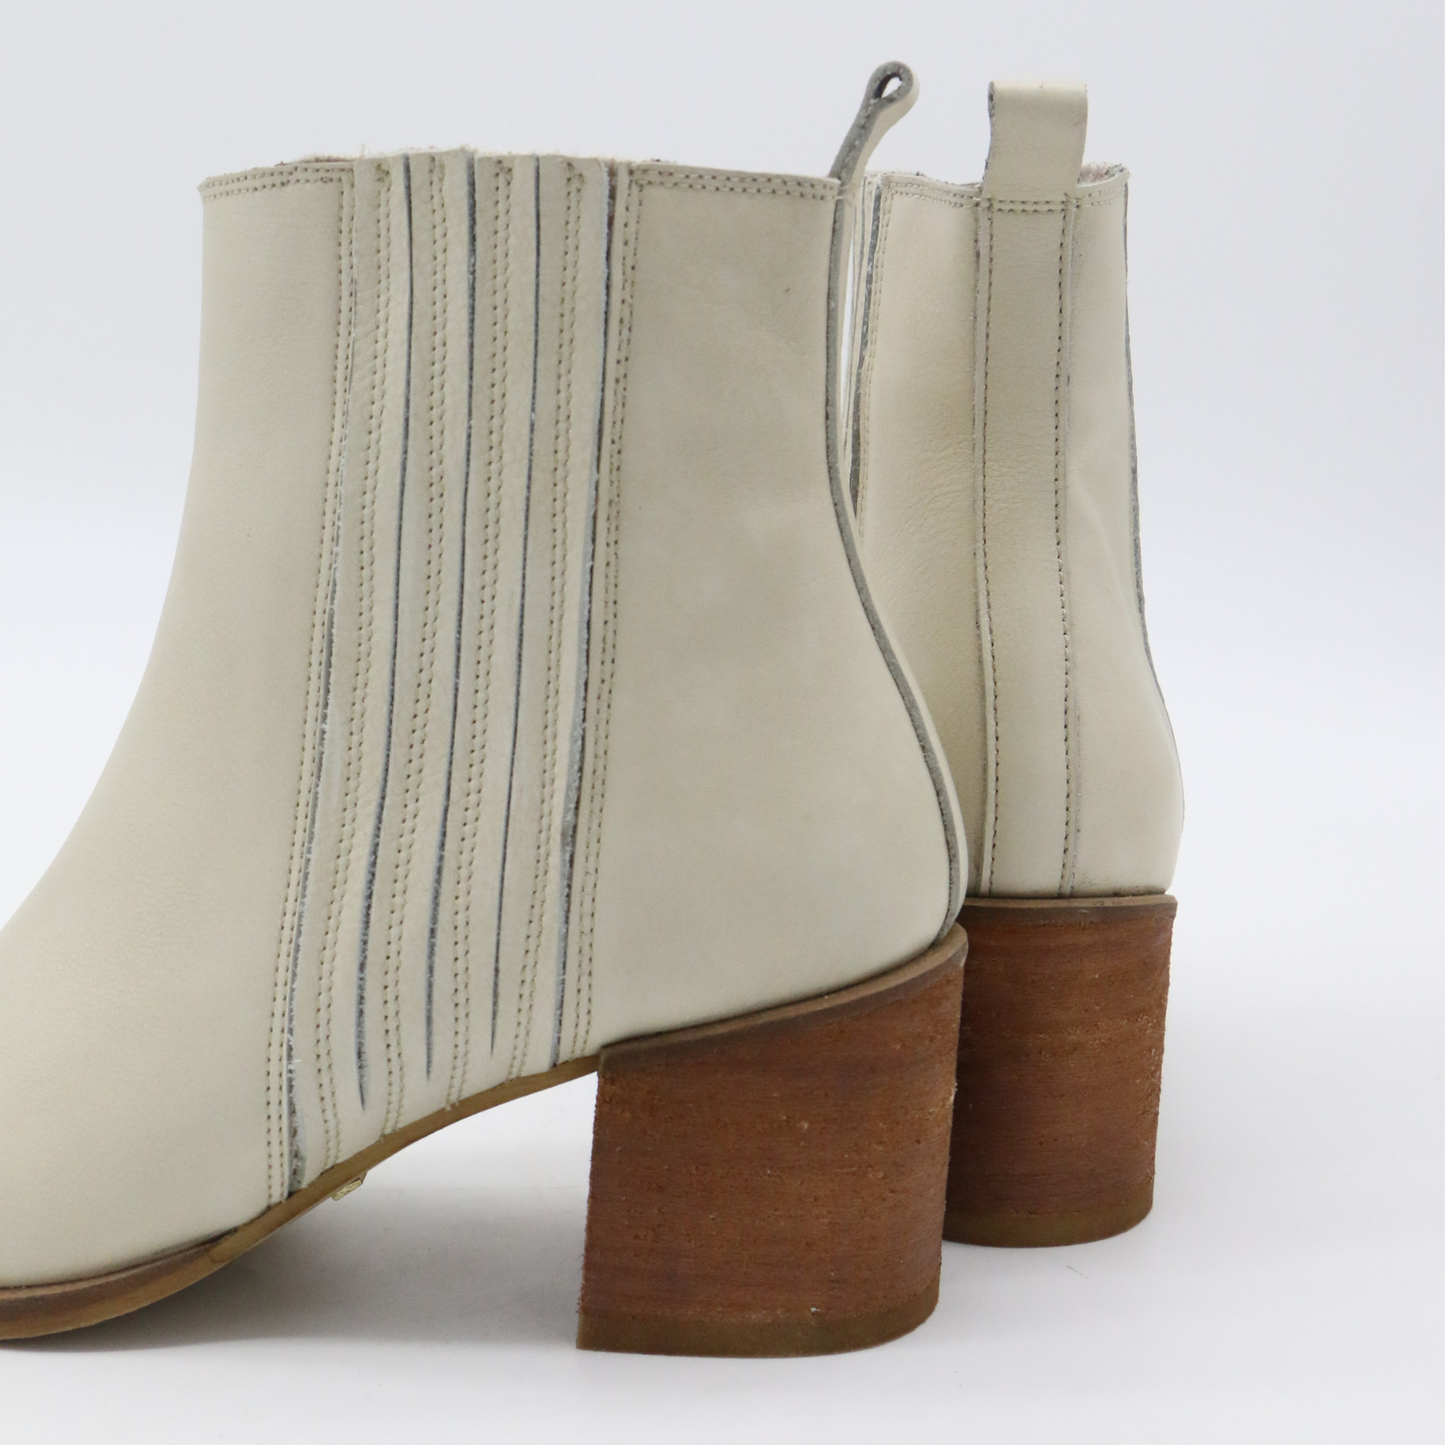 Stivali Boots - Premium Boots from Marina St Barth - Just $220! Shop now at Marina St Barth